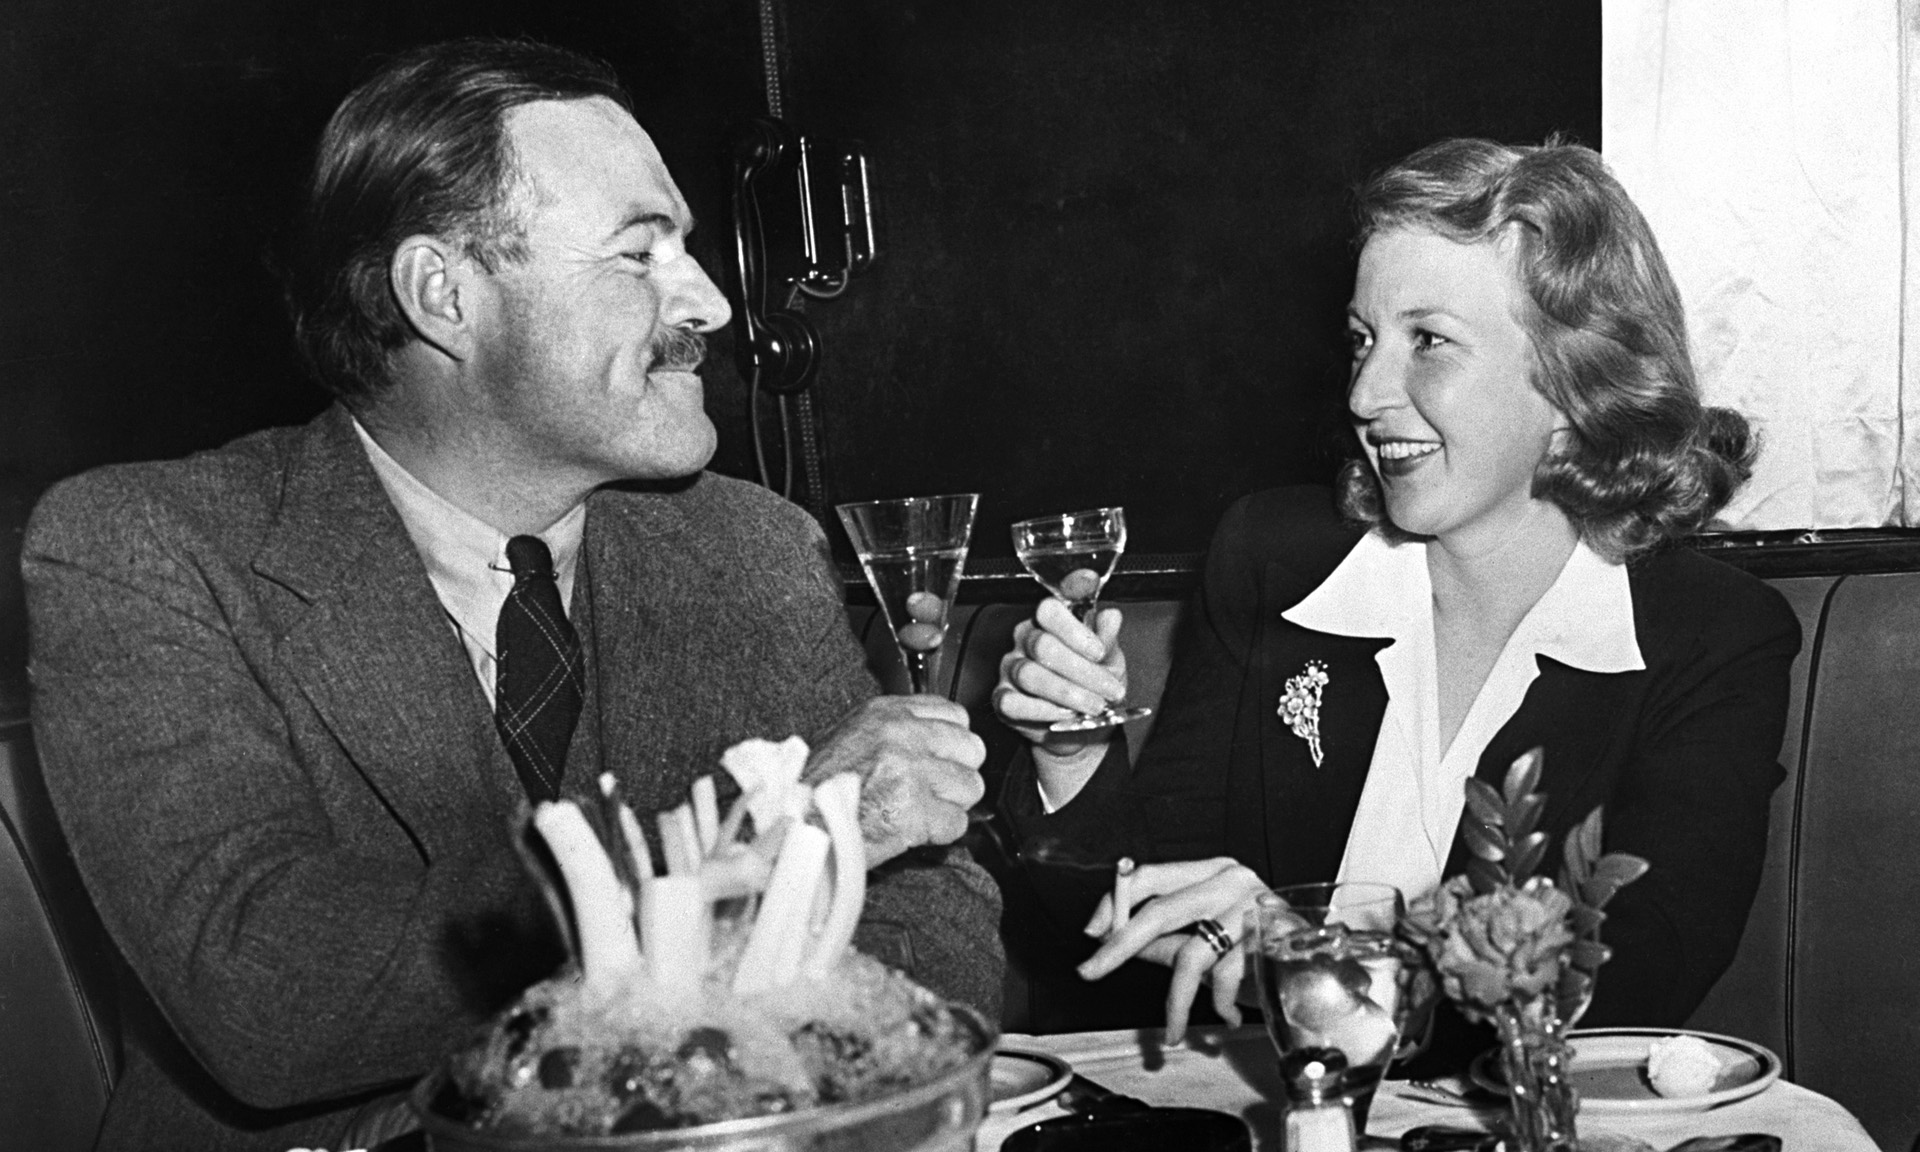 Ernest Hemingway and Martha Gelhorn